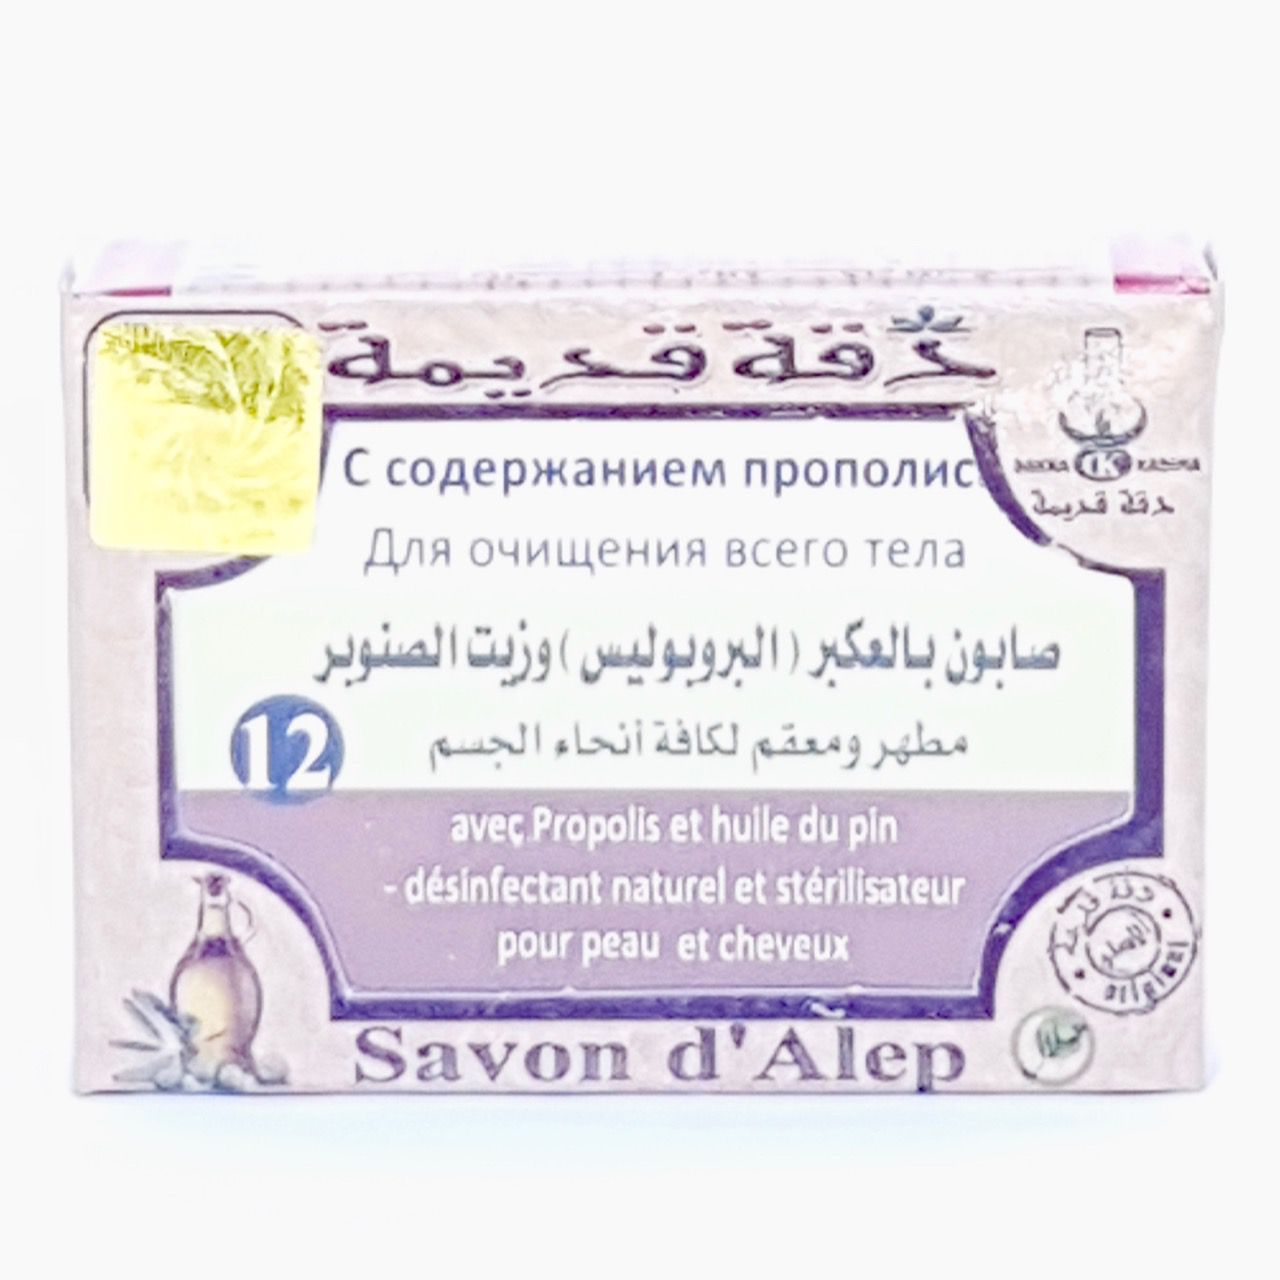 Savon d'Alep n°12 propolis et huile de pin 100gr | DAKKA KADIMA